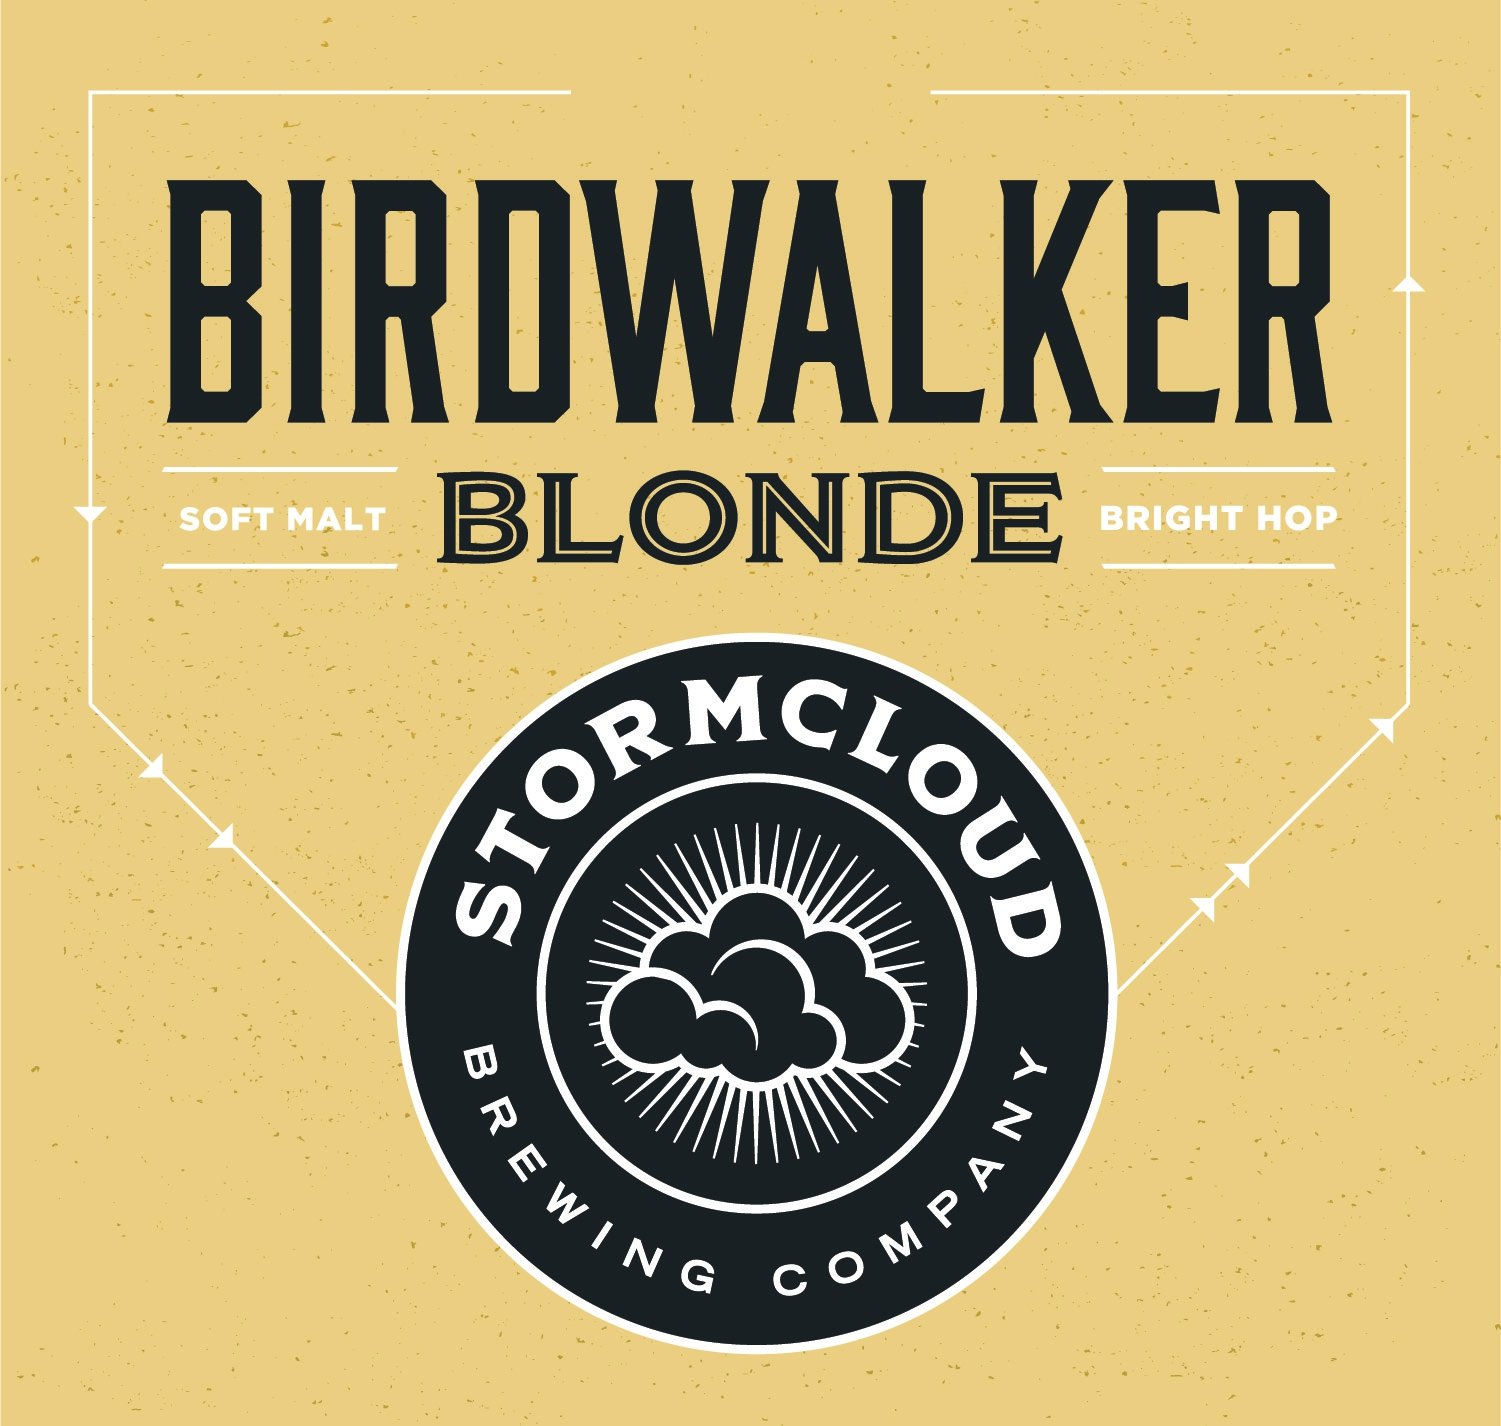 BirdWalker 6 Pack_End Graphic copy.jpg